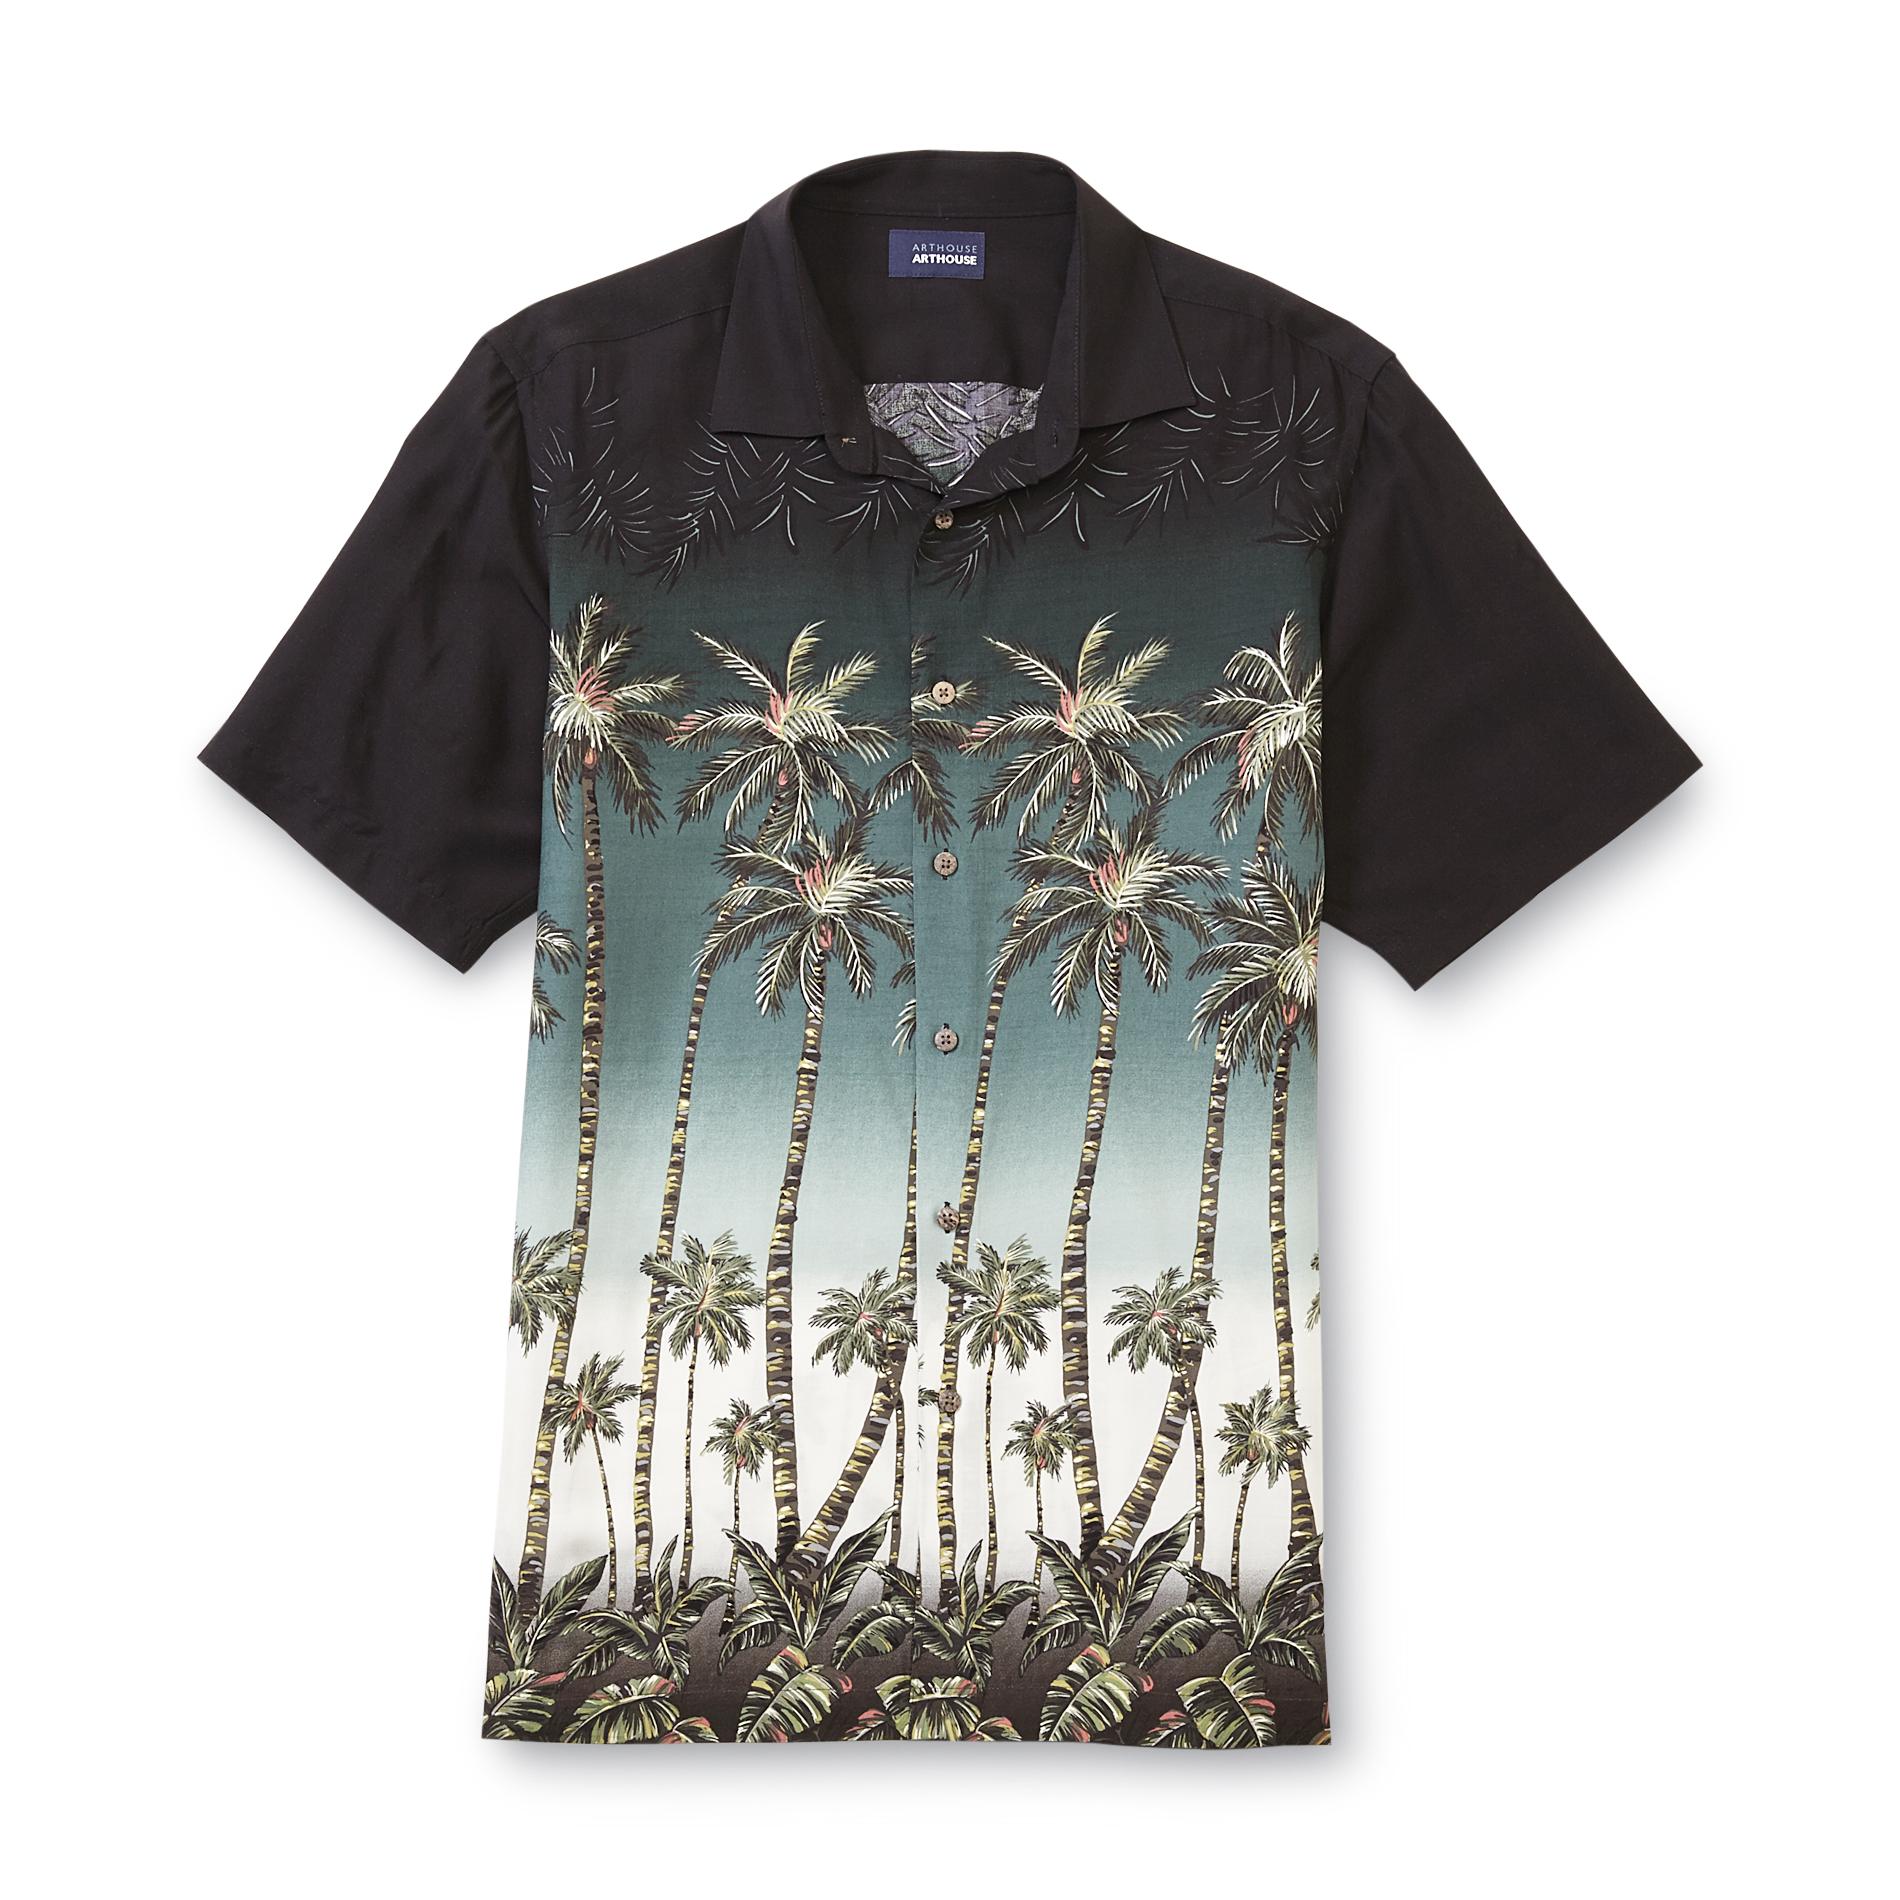 Basic Men's Big & Tall Camp Shirt - Tropical Print